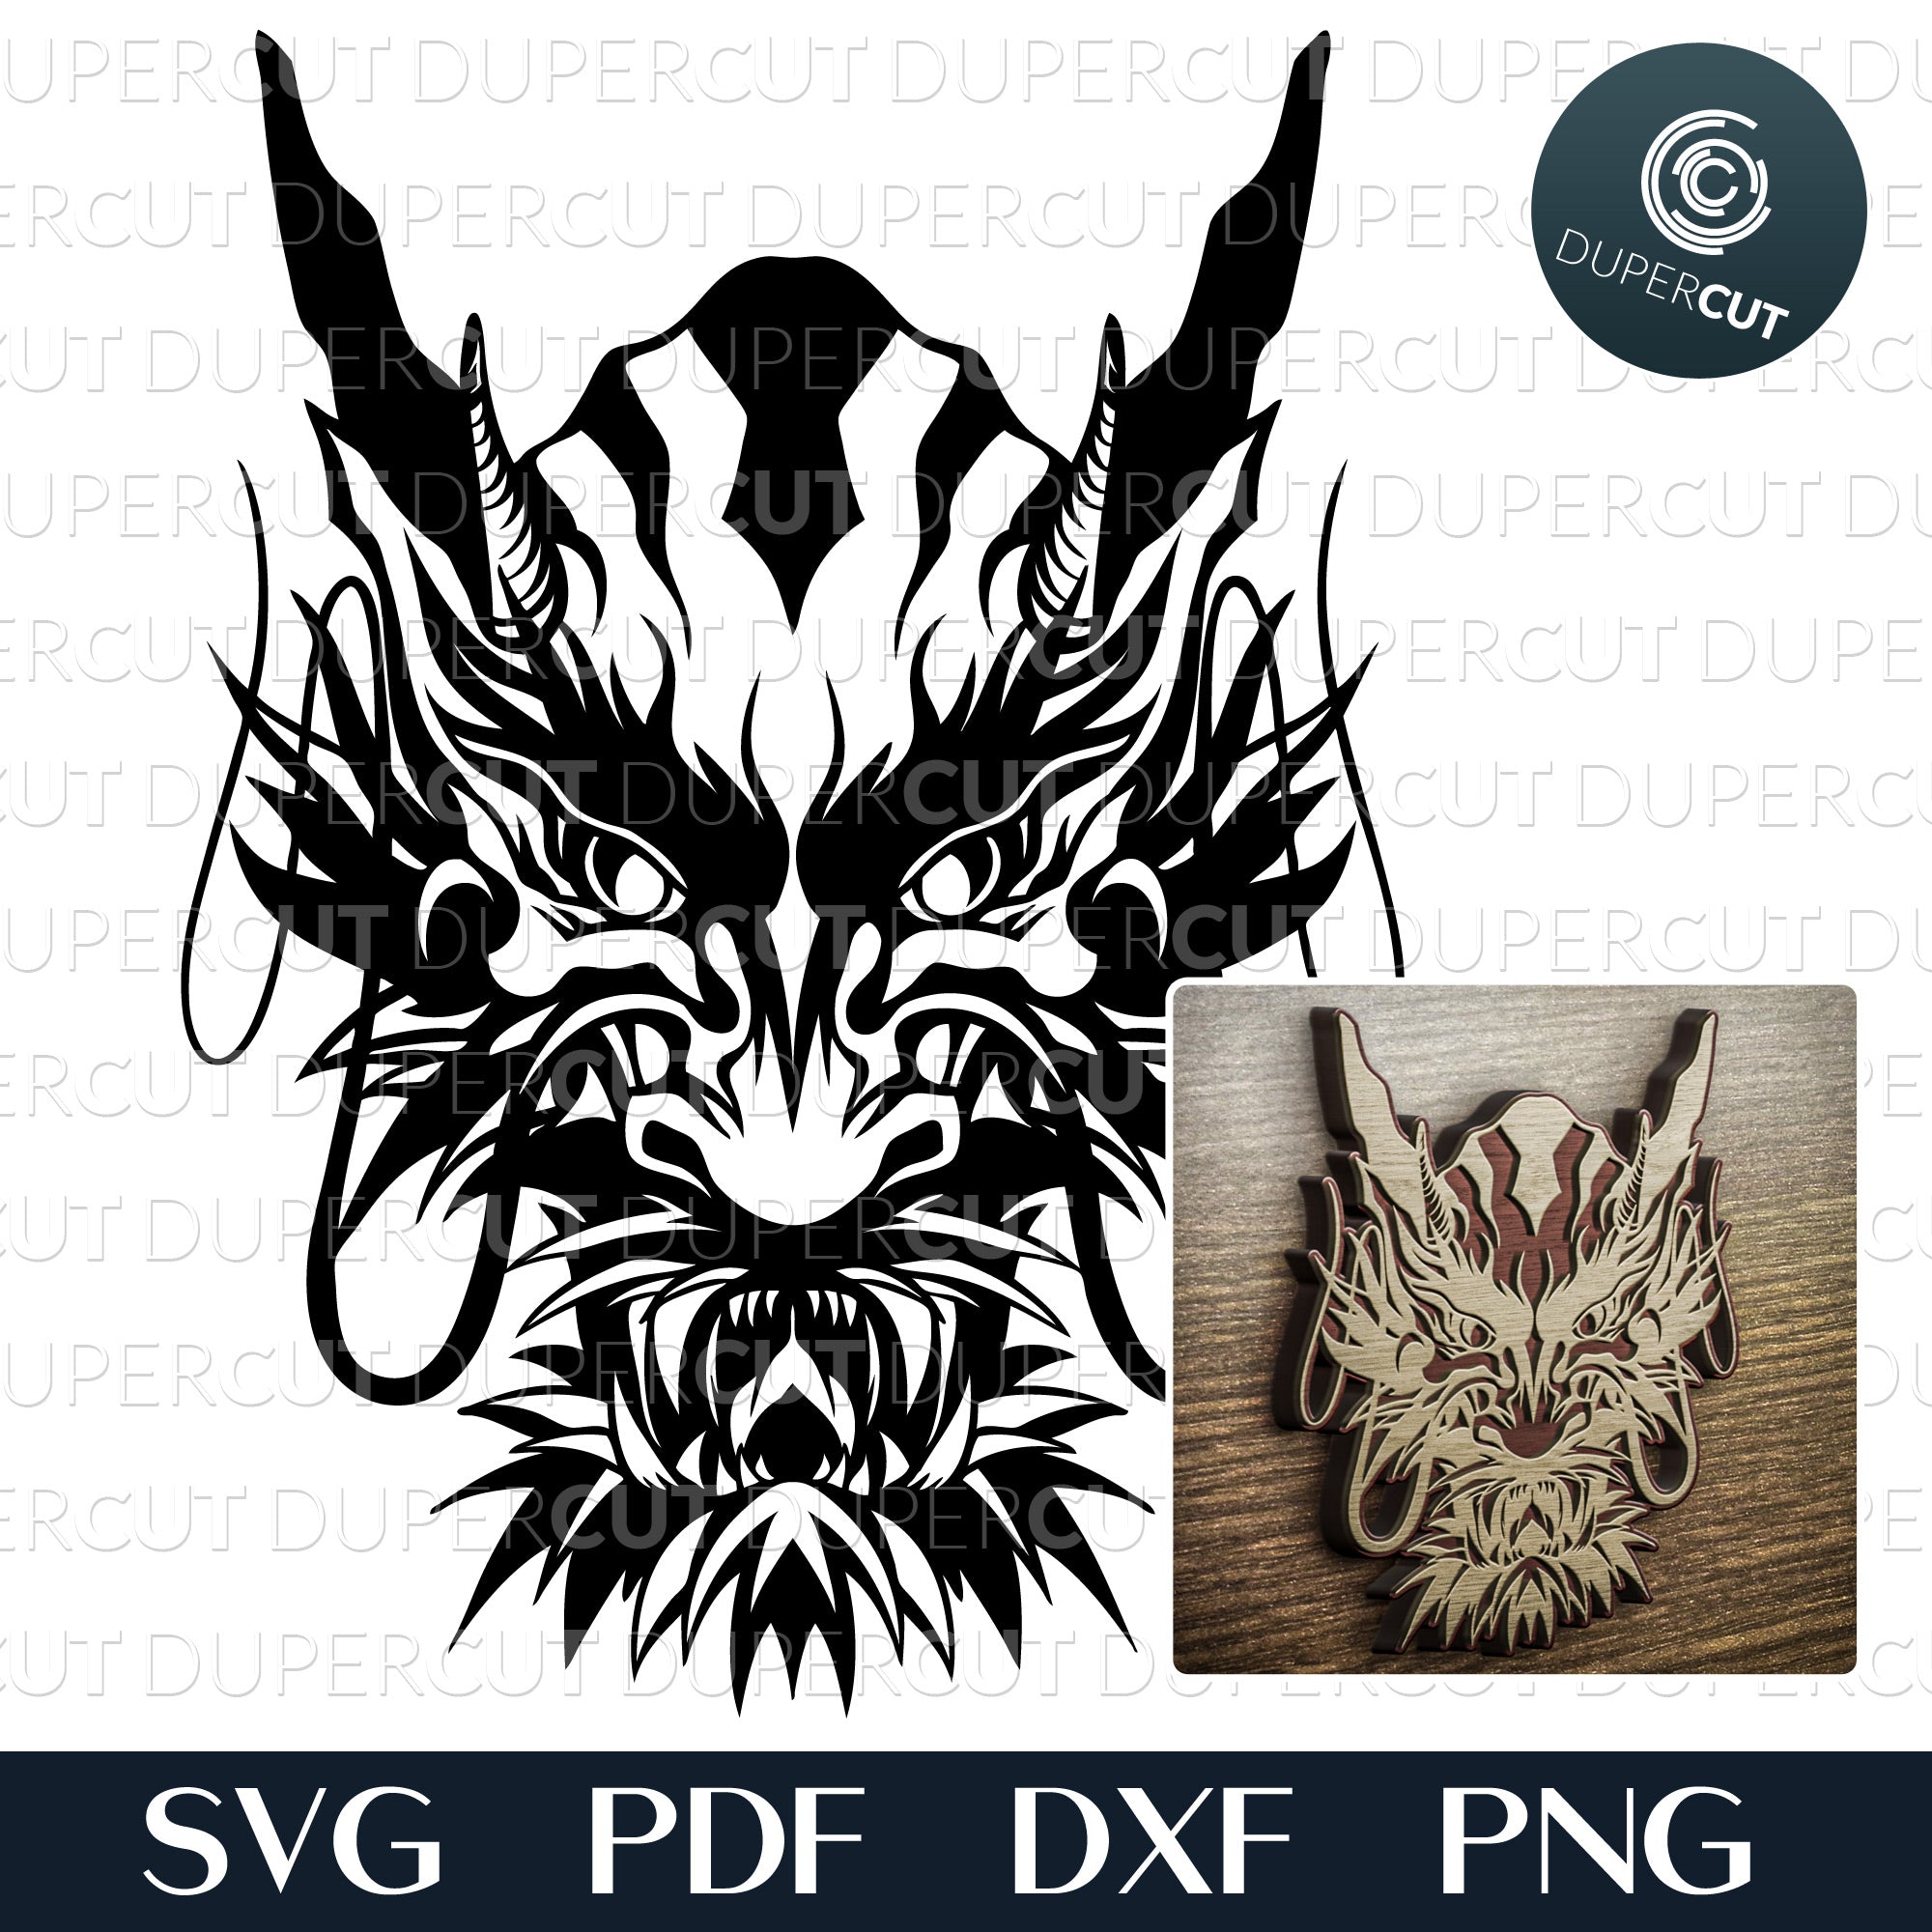 Download Dragon Head Svg Pdf Dxf Png Dupercut